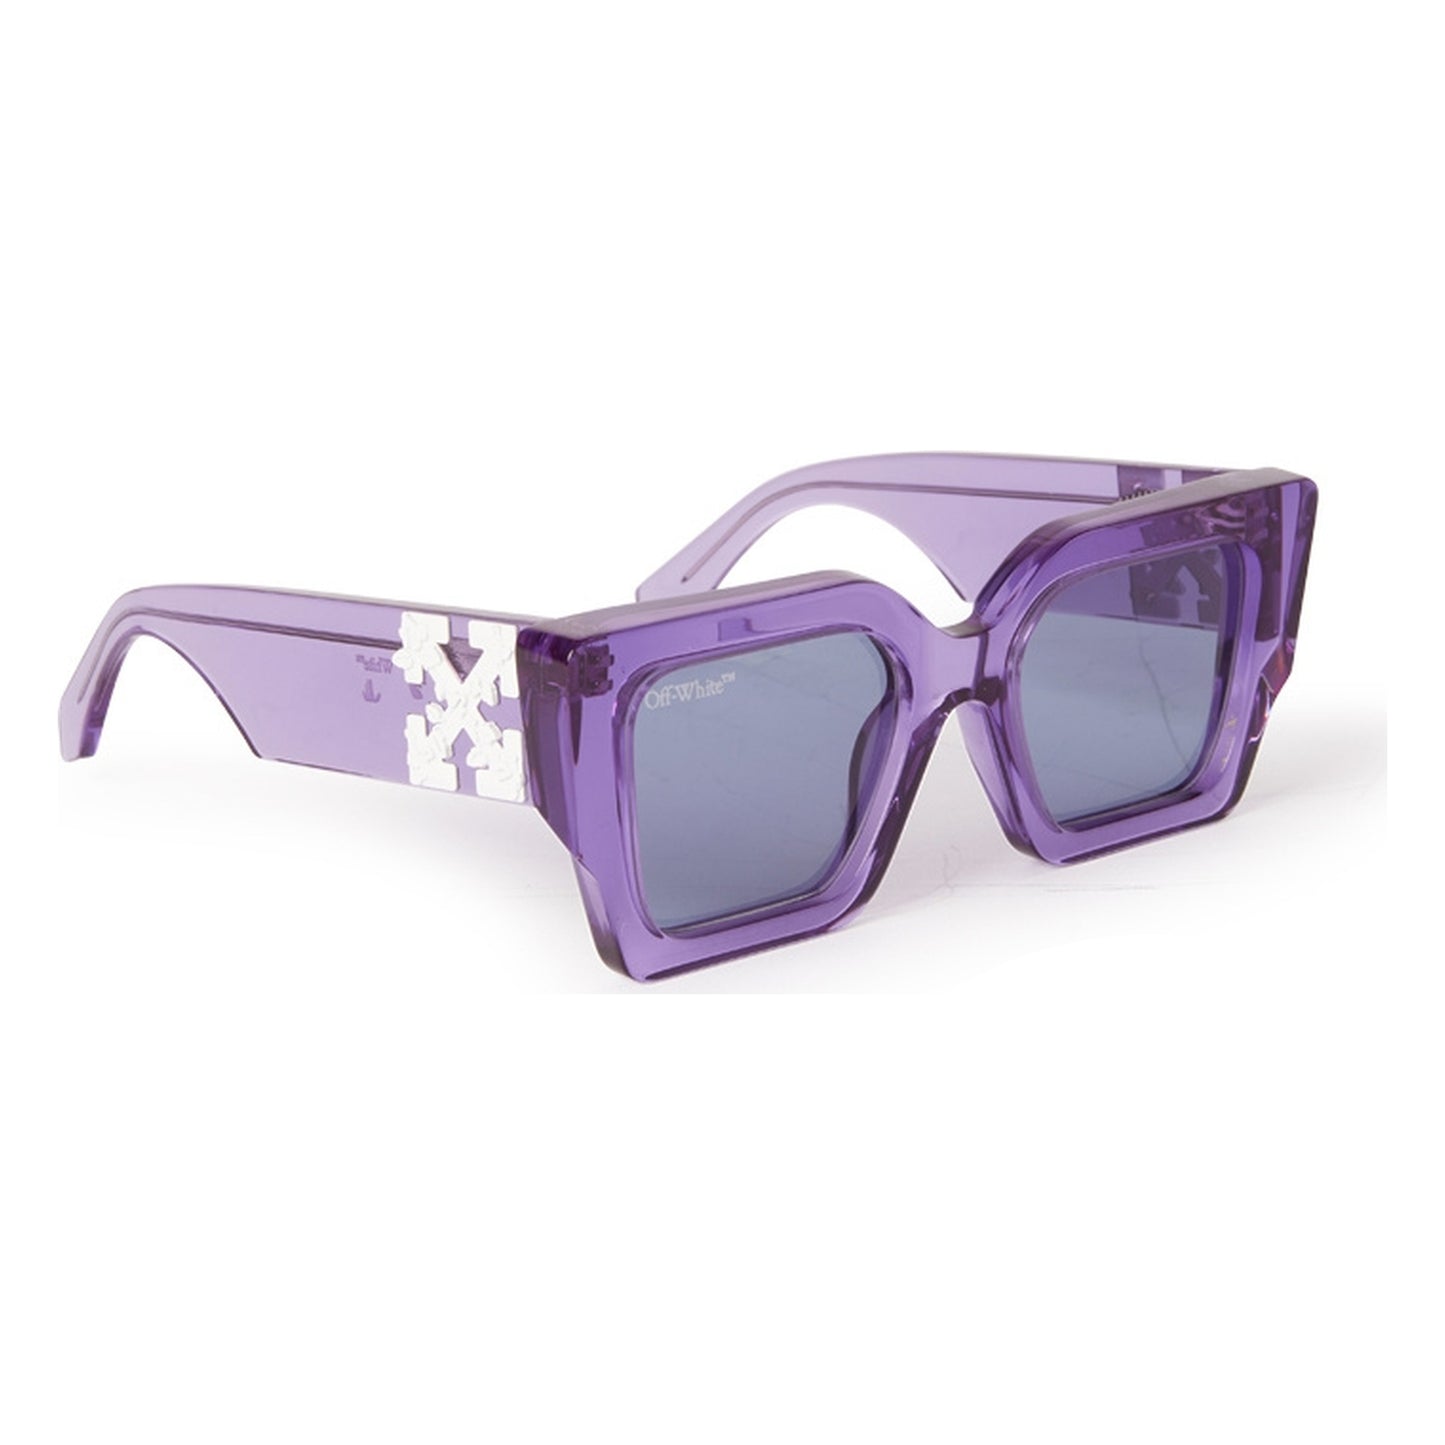 Off-White Catalina Crystal Purple NEW SEASON 55mm New Sunglasses